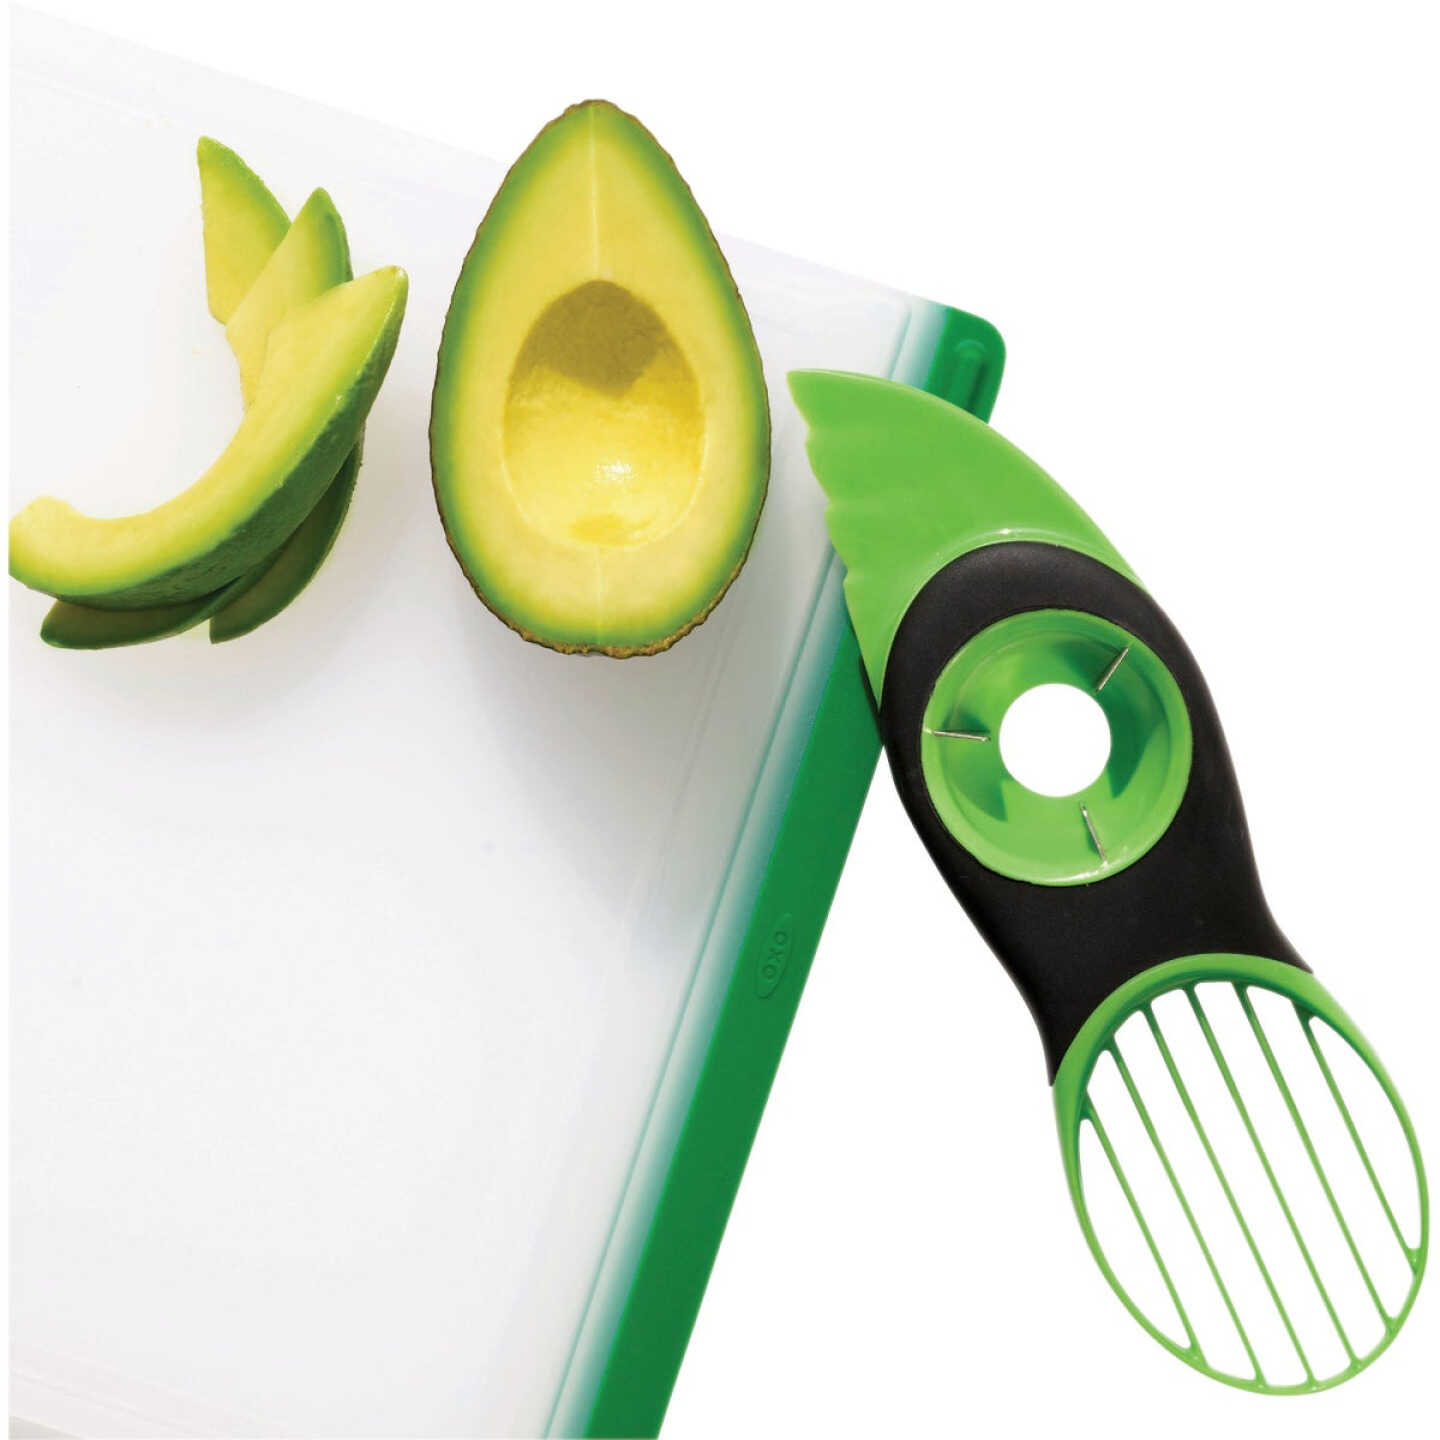 5 in 1 Avocado Slicer Pitters Cutter Tool Kit Non Slip Grip